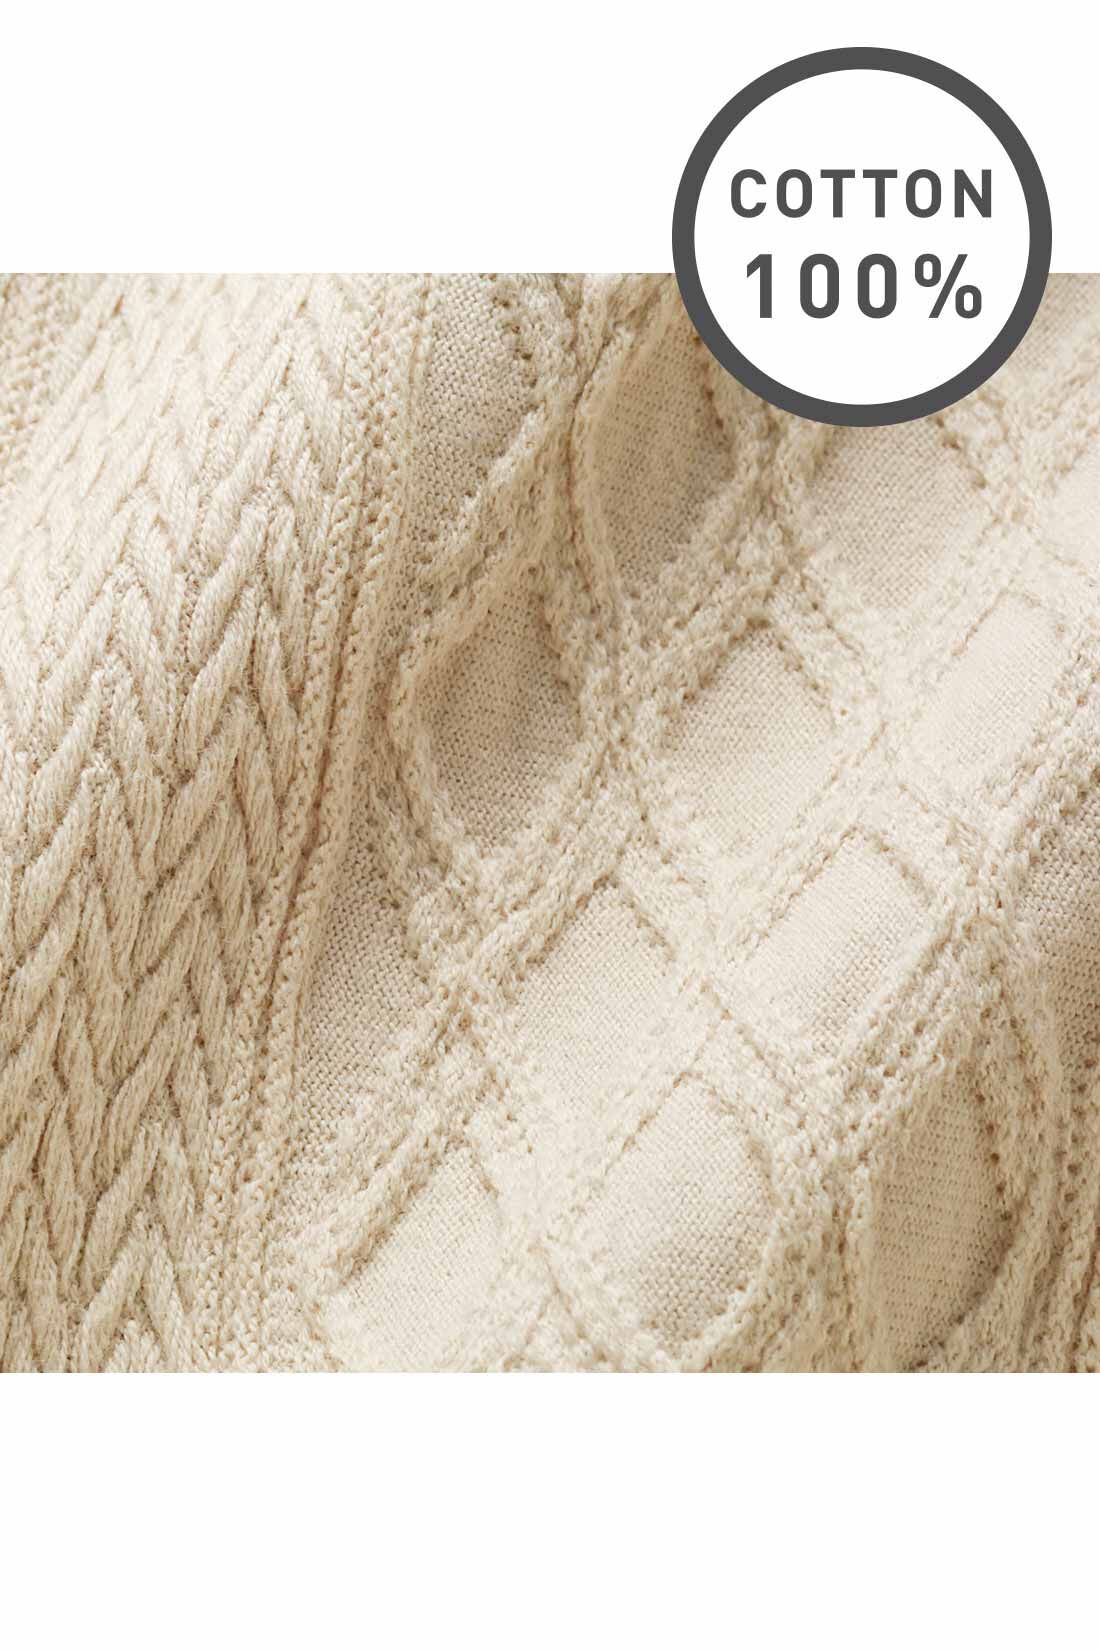 Live in  comfort|Live love cottonプロジェクト　リブ イン コンフォート　編み柄が素敵な袖口リブオーガニックコットントップス〈アプリコット〉|ニット見えする、やや厚手のジャカード編みのカットソー素材。